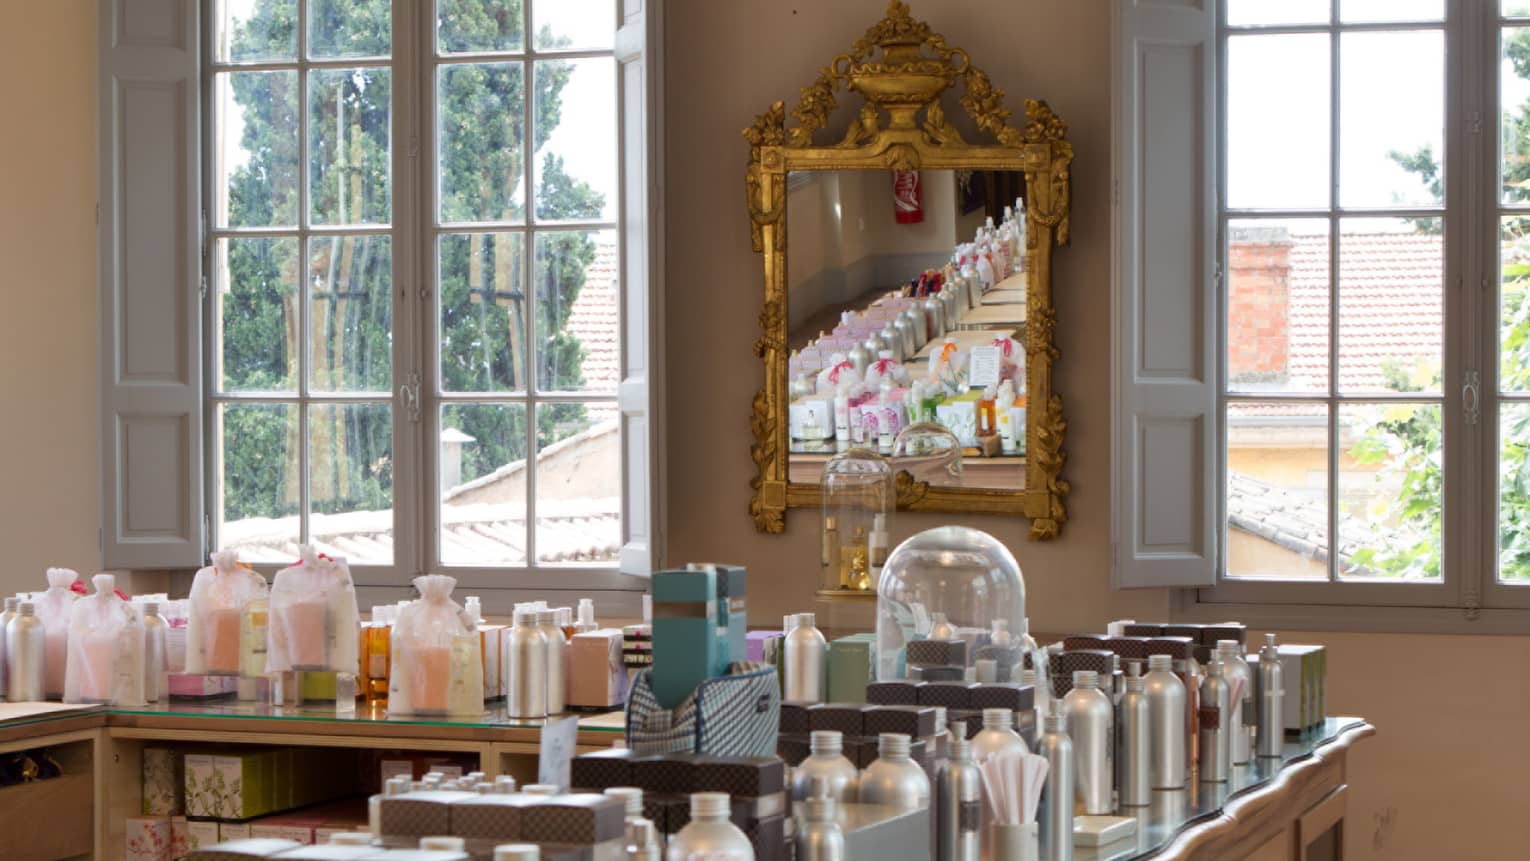 Fragonard parfumerie with fragrance bottles lining table